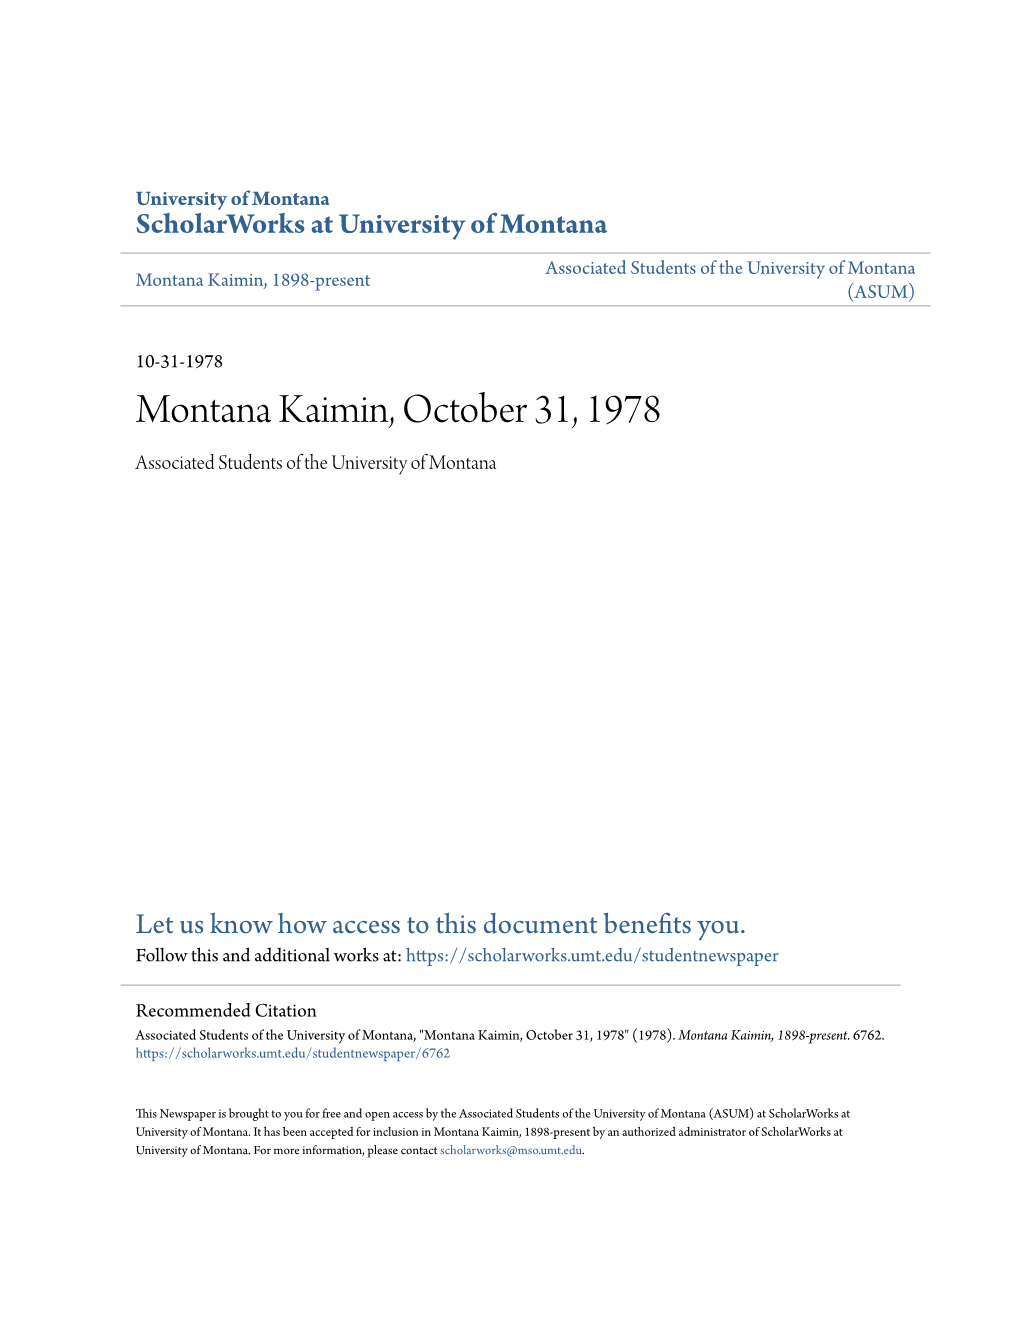 Montana Kaimin, October 31, 1978 Associated Students of the University of Montana